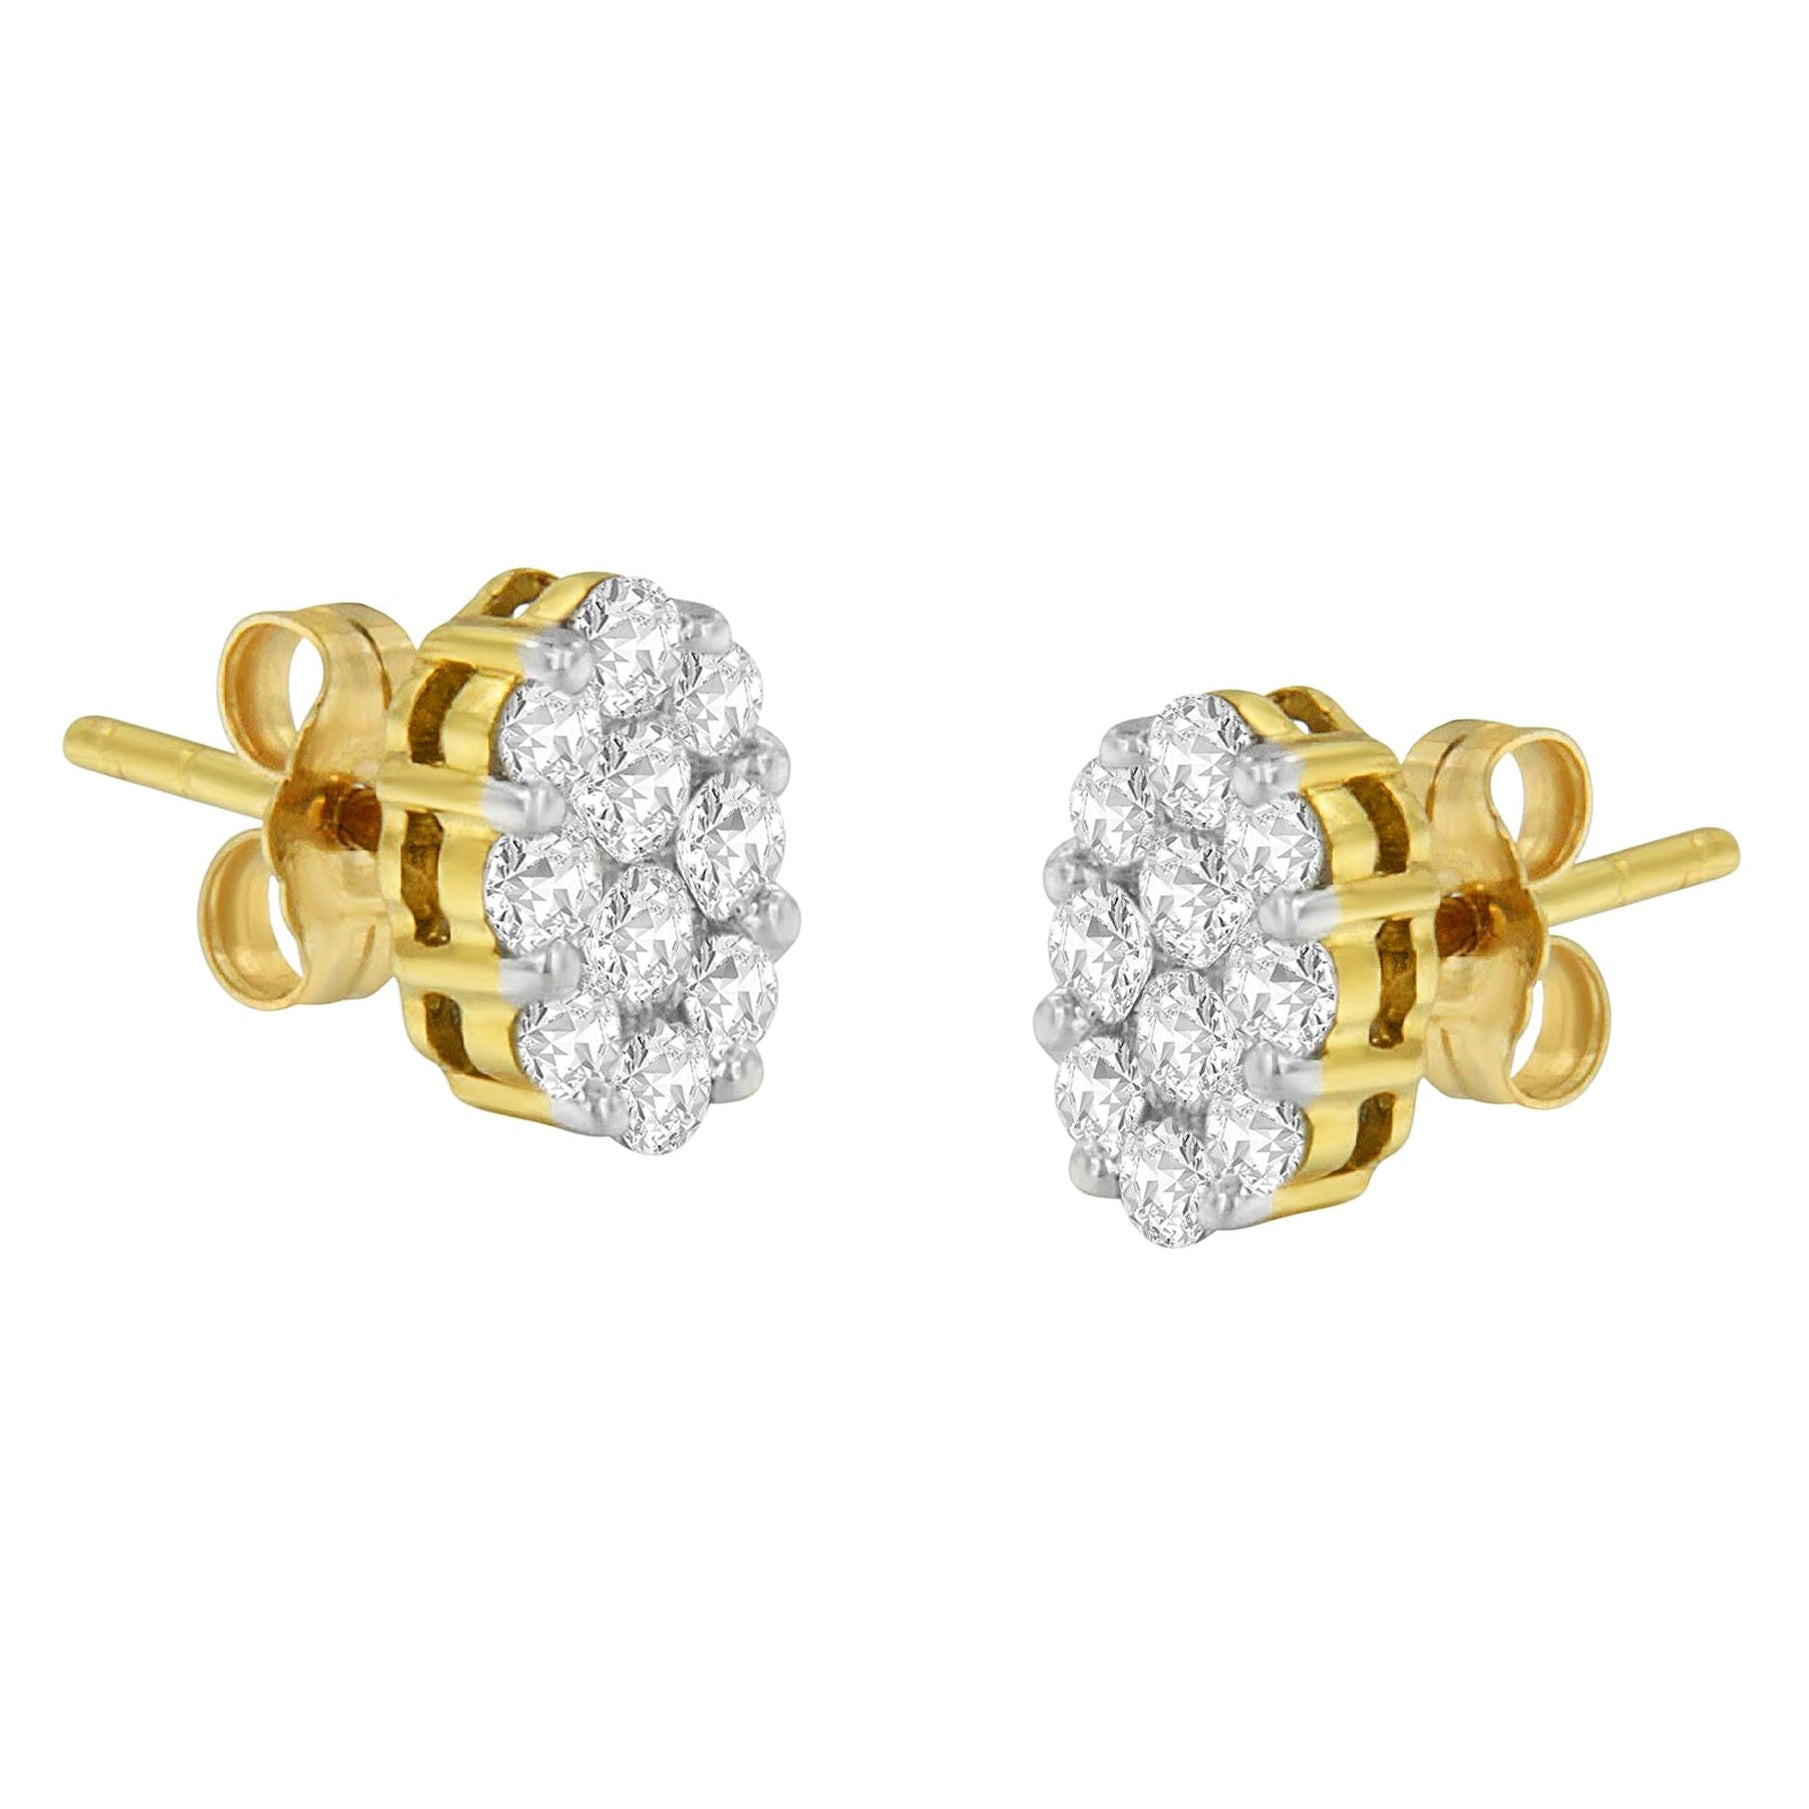 18K Yellow Gold 1.0 Carat Floral Cluster Diamond Stud Earrings